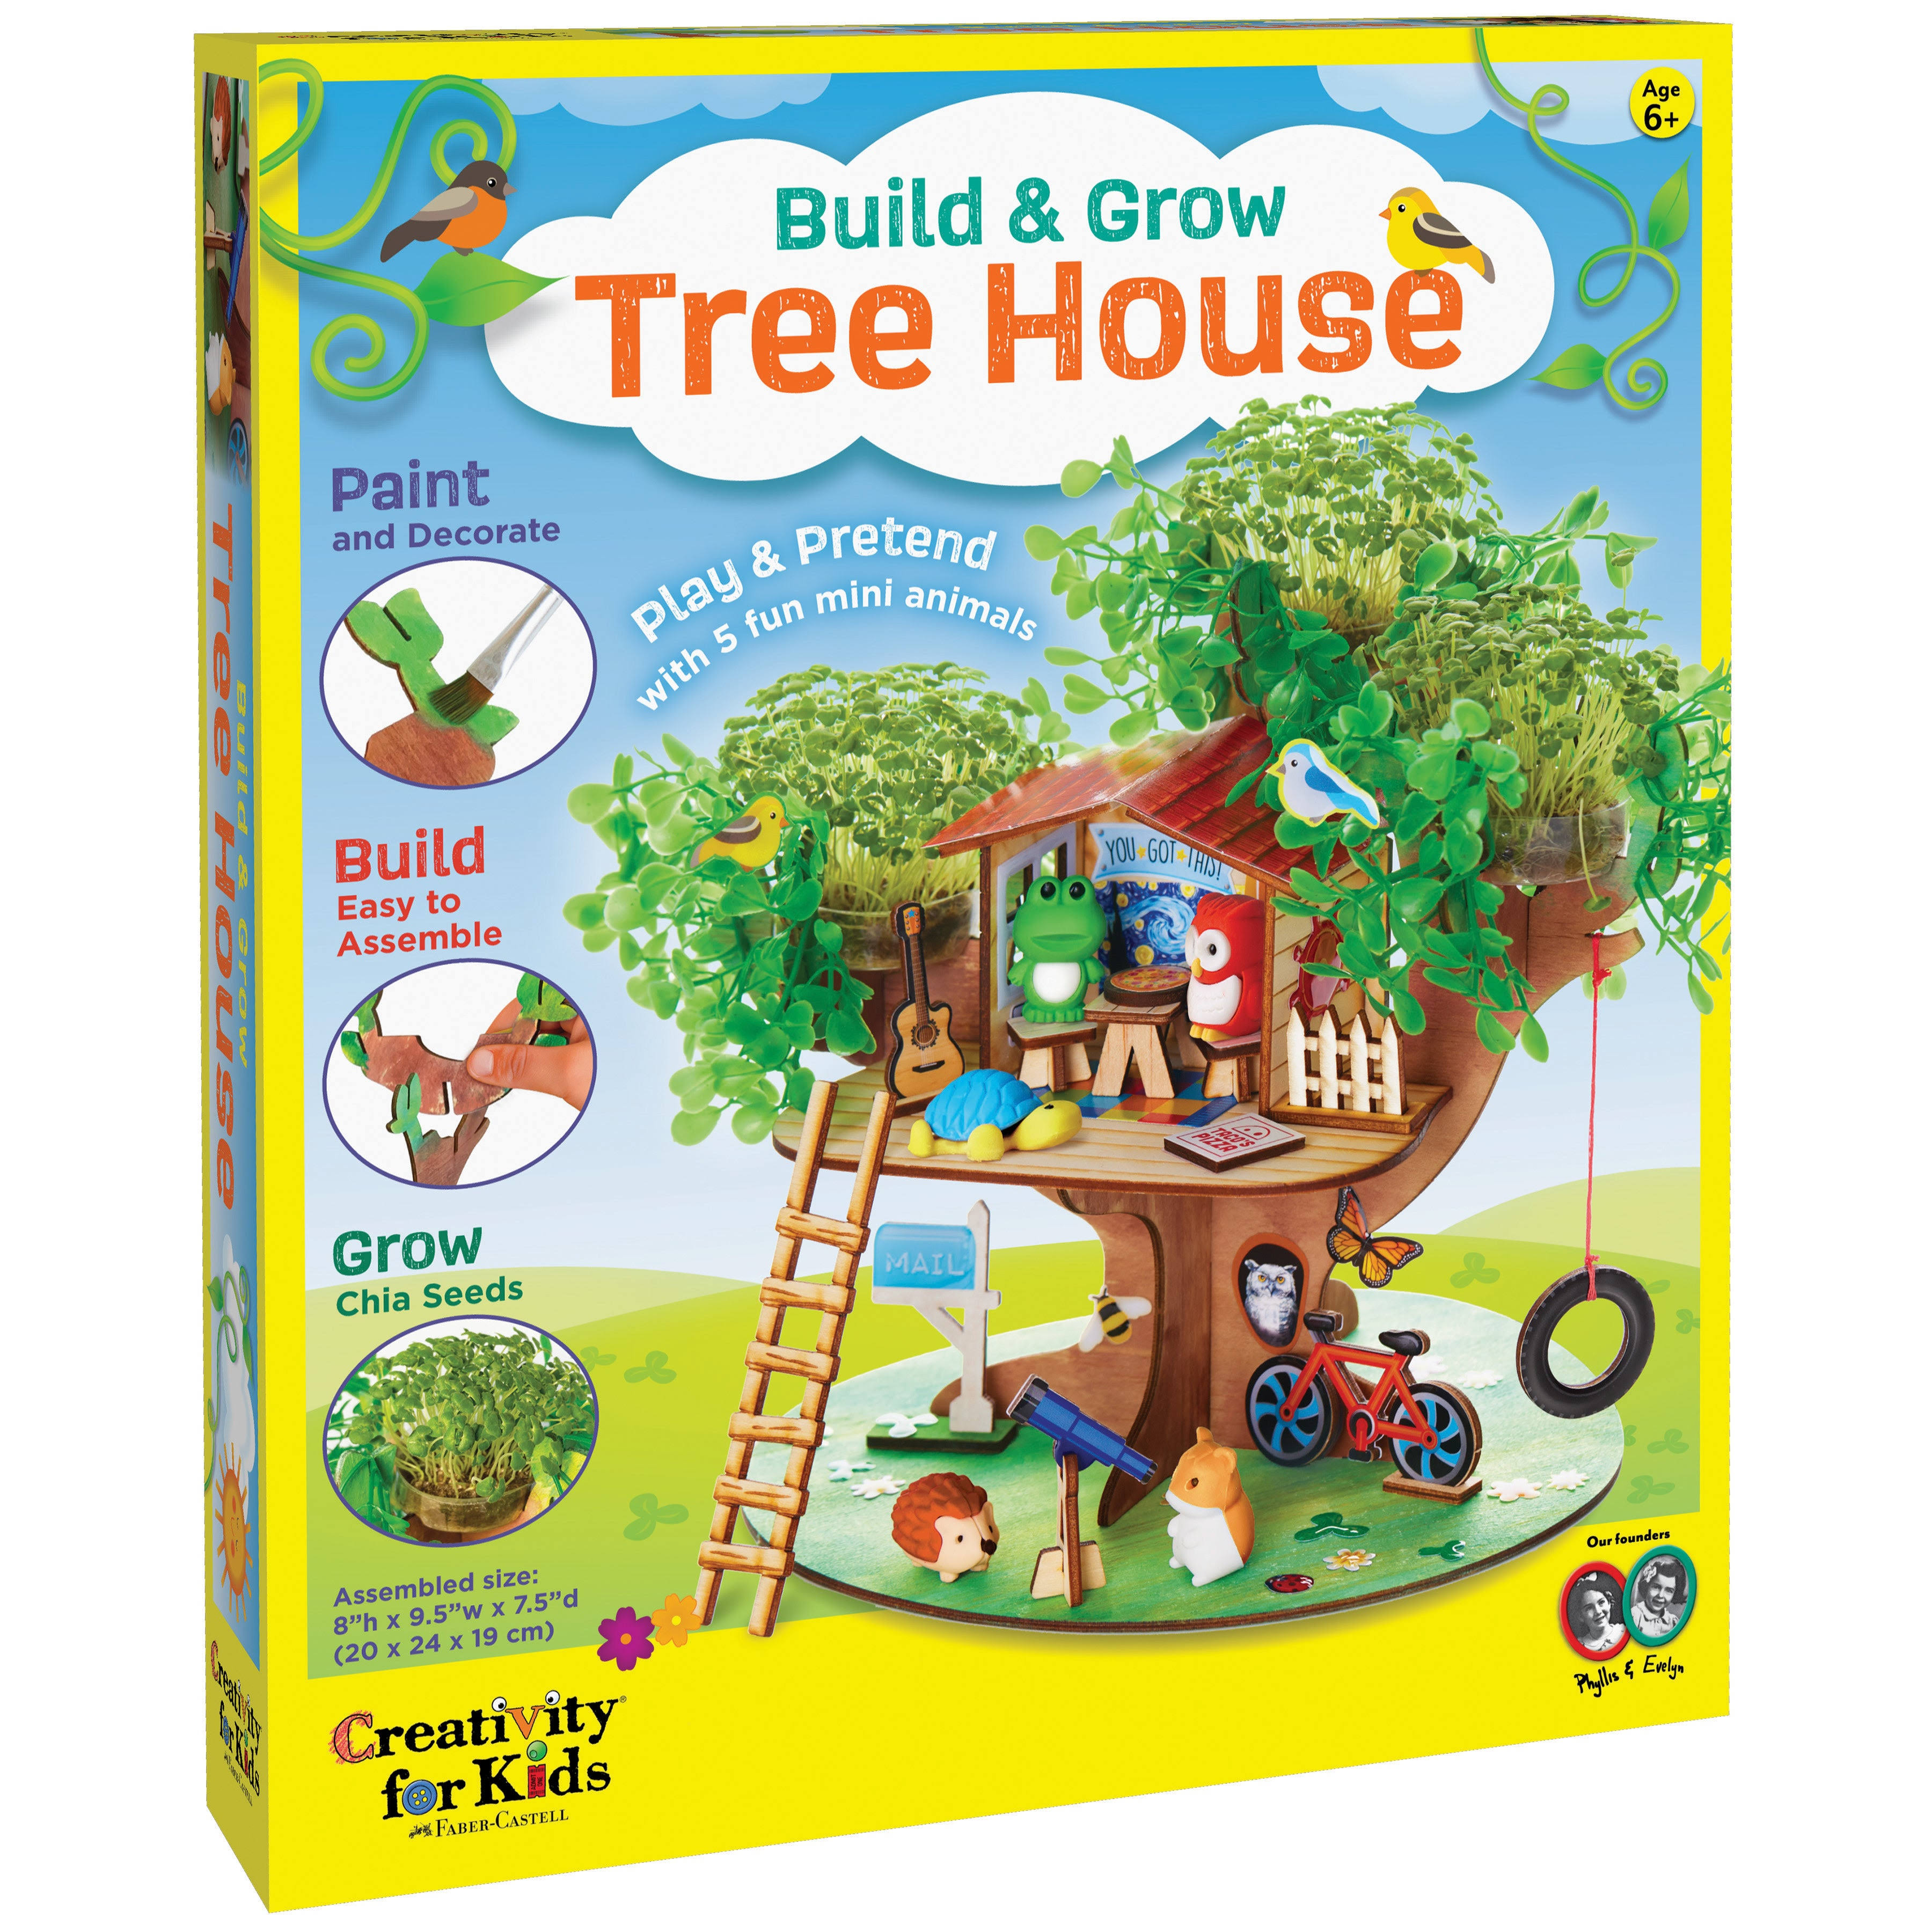 Creativity for Kids | Build & Grow Tree House